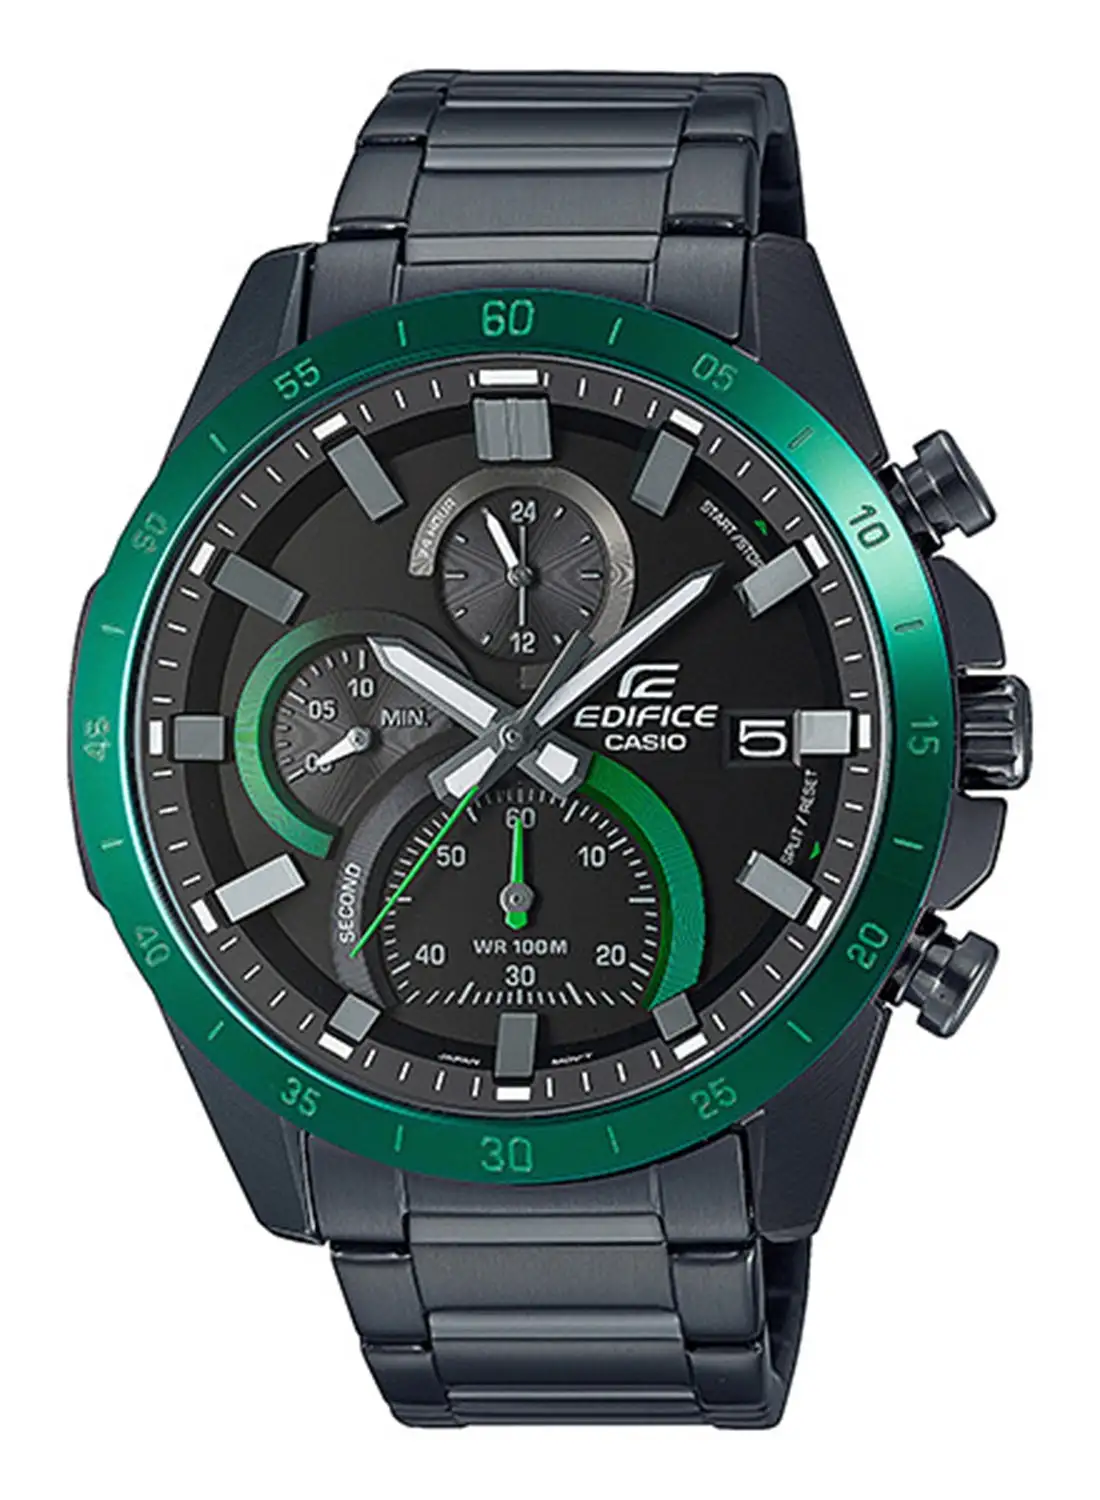 CASIO Men's Analog Stainless Steel Wrist Watch EFR-571DC-1AVUDF - 42 Mm